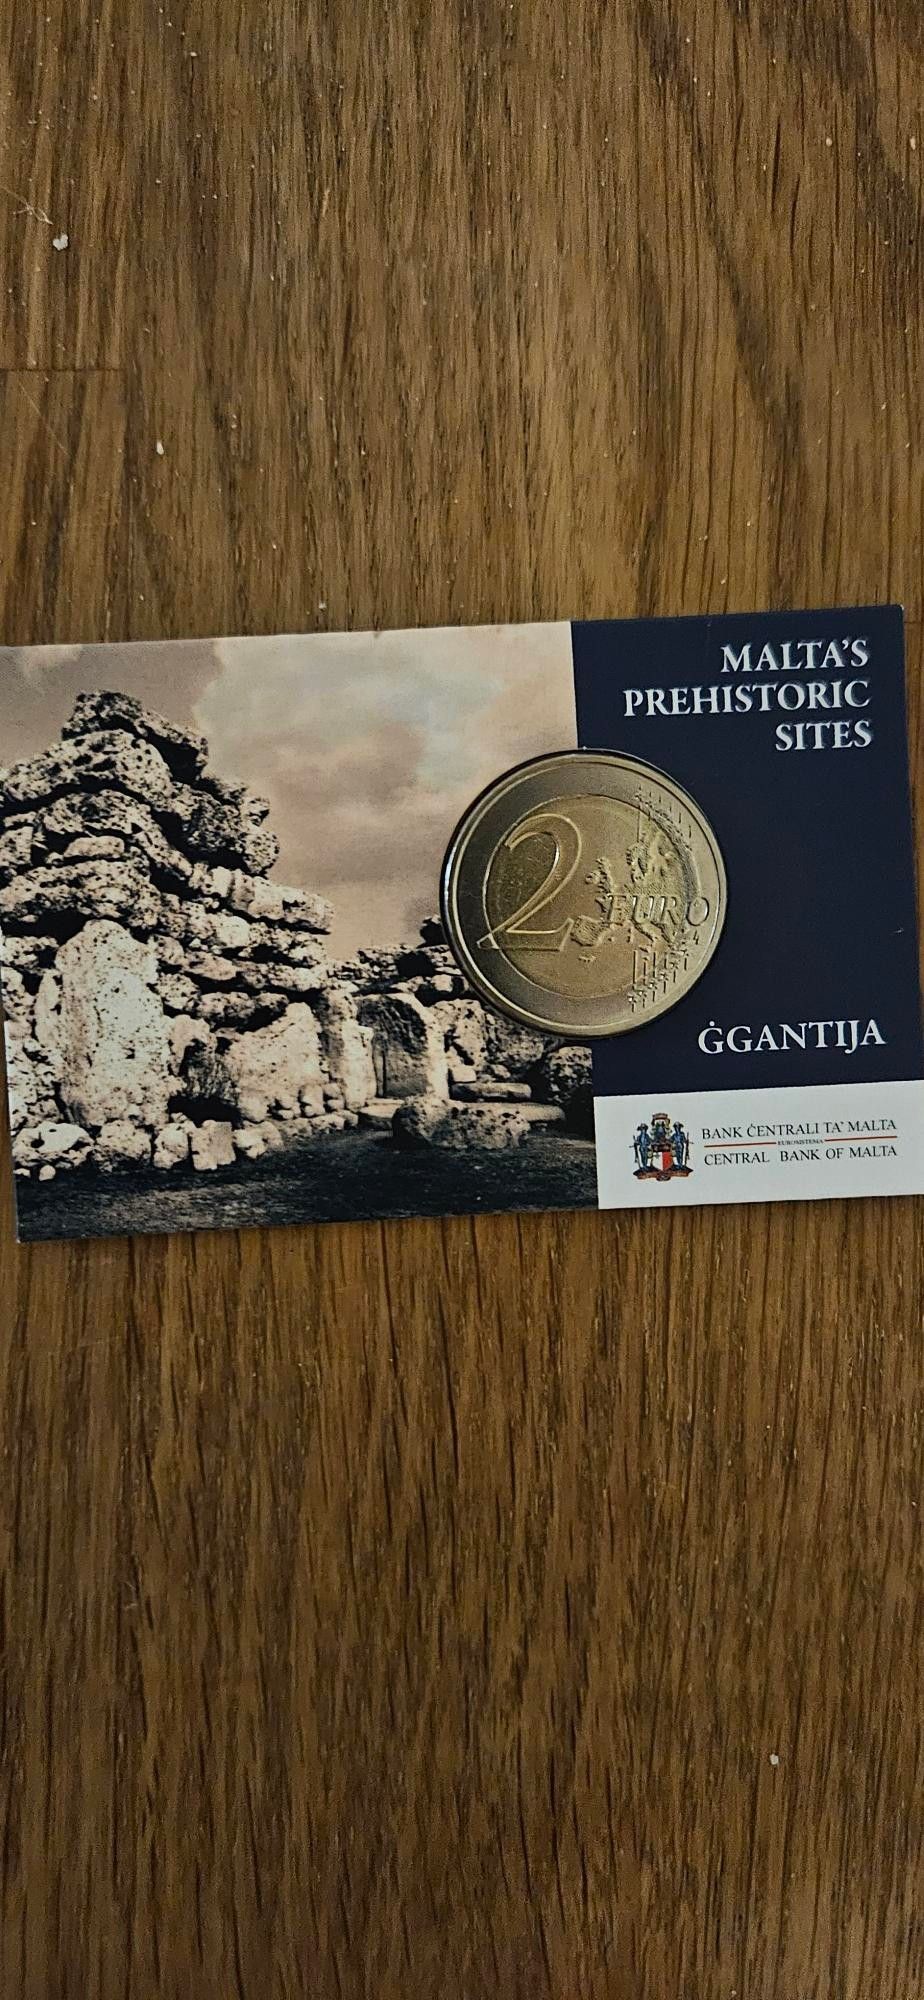 Malta 2e coincard Ggantija 2016